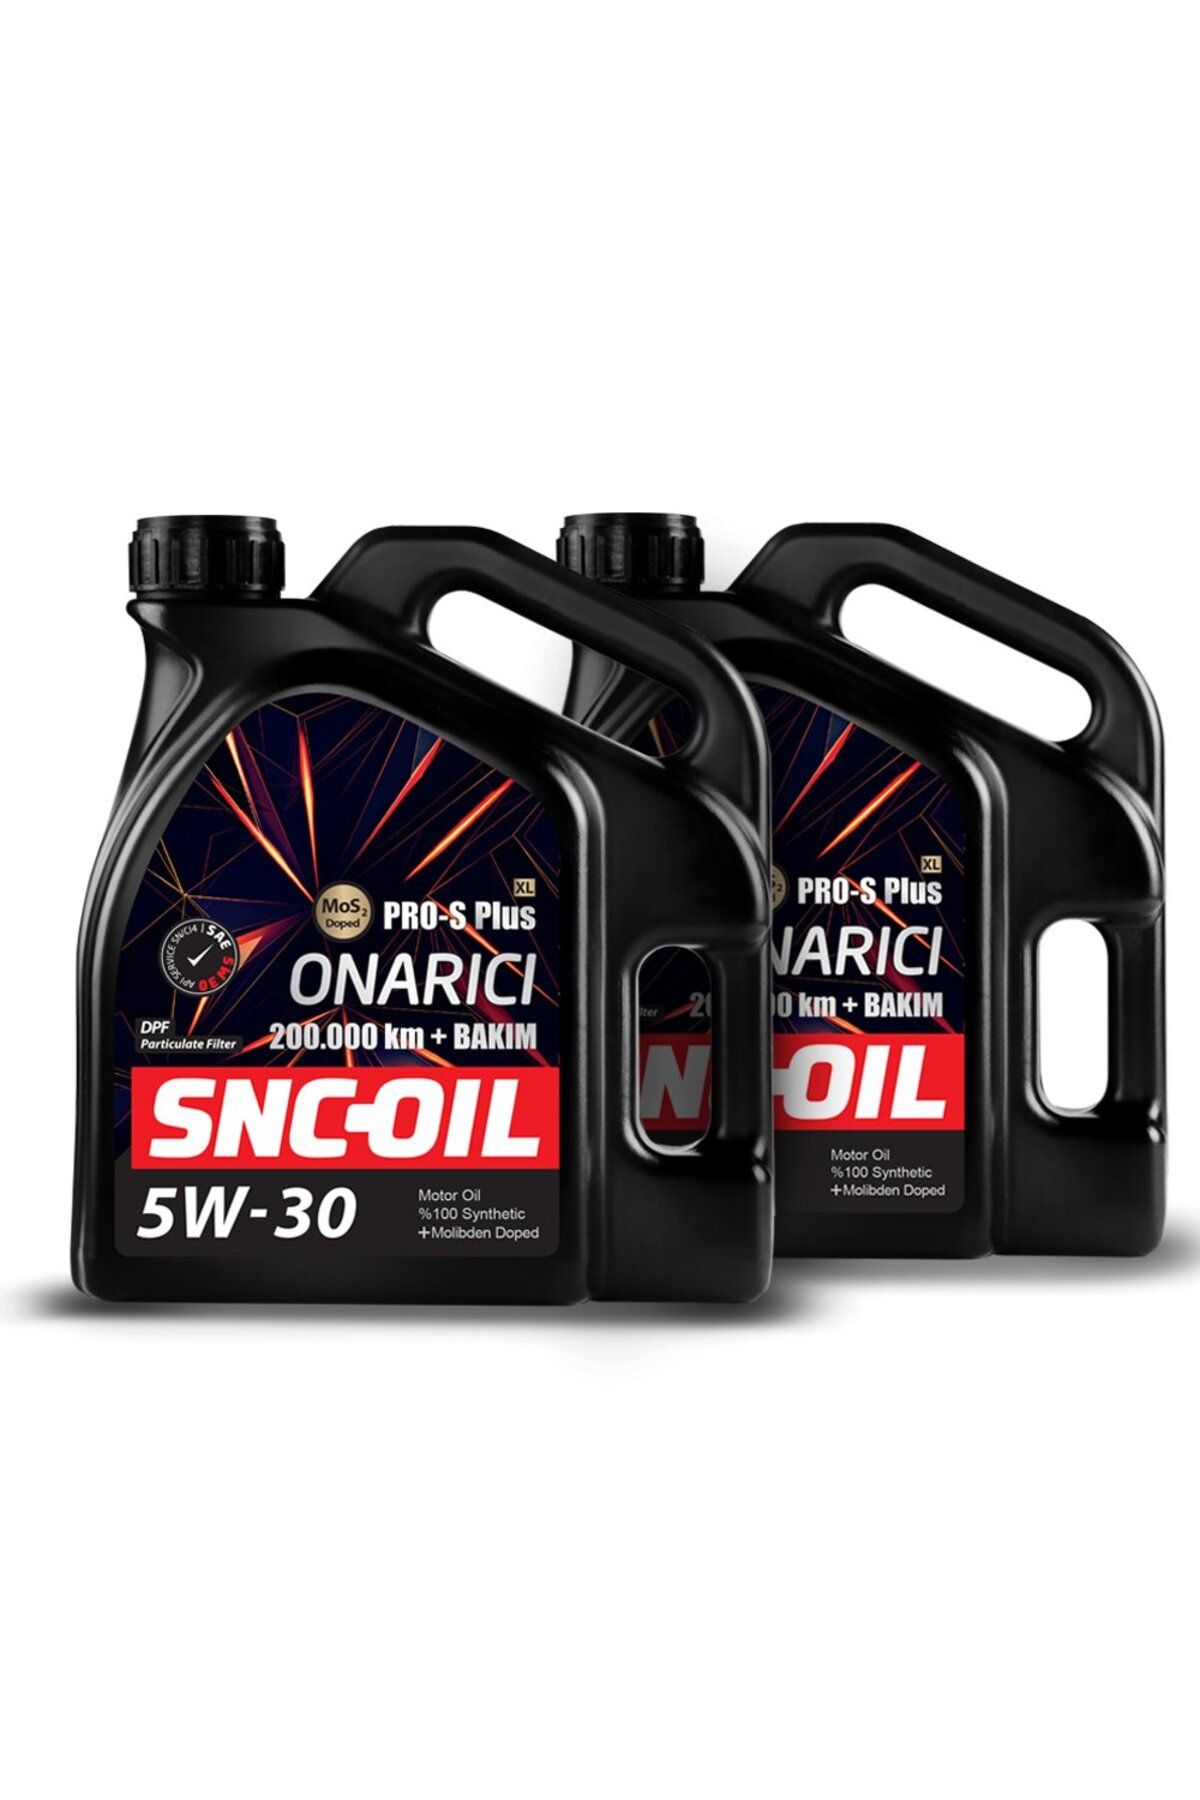 snc Icon Group - SNC-OIL 200.000 Km + Bakım Pro-S Plus XL Onarıcı 5W-30 Motor Yağı (4+4 Litre)